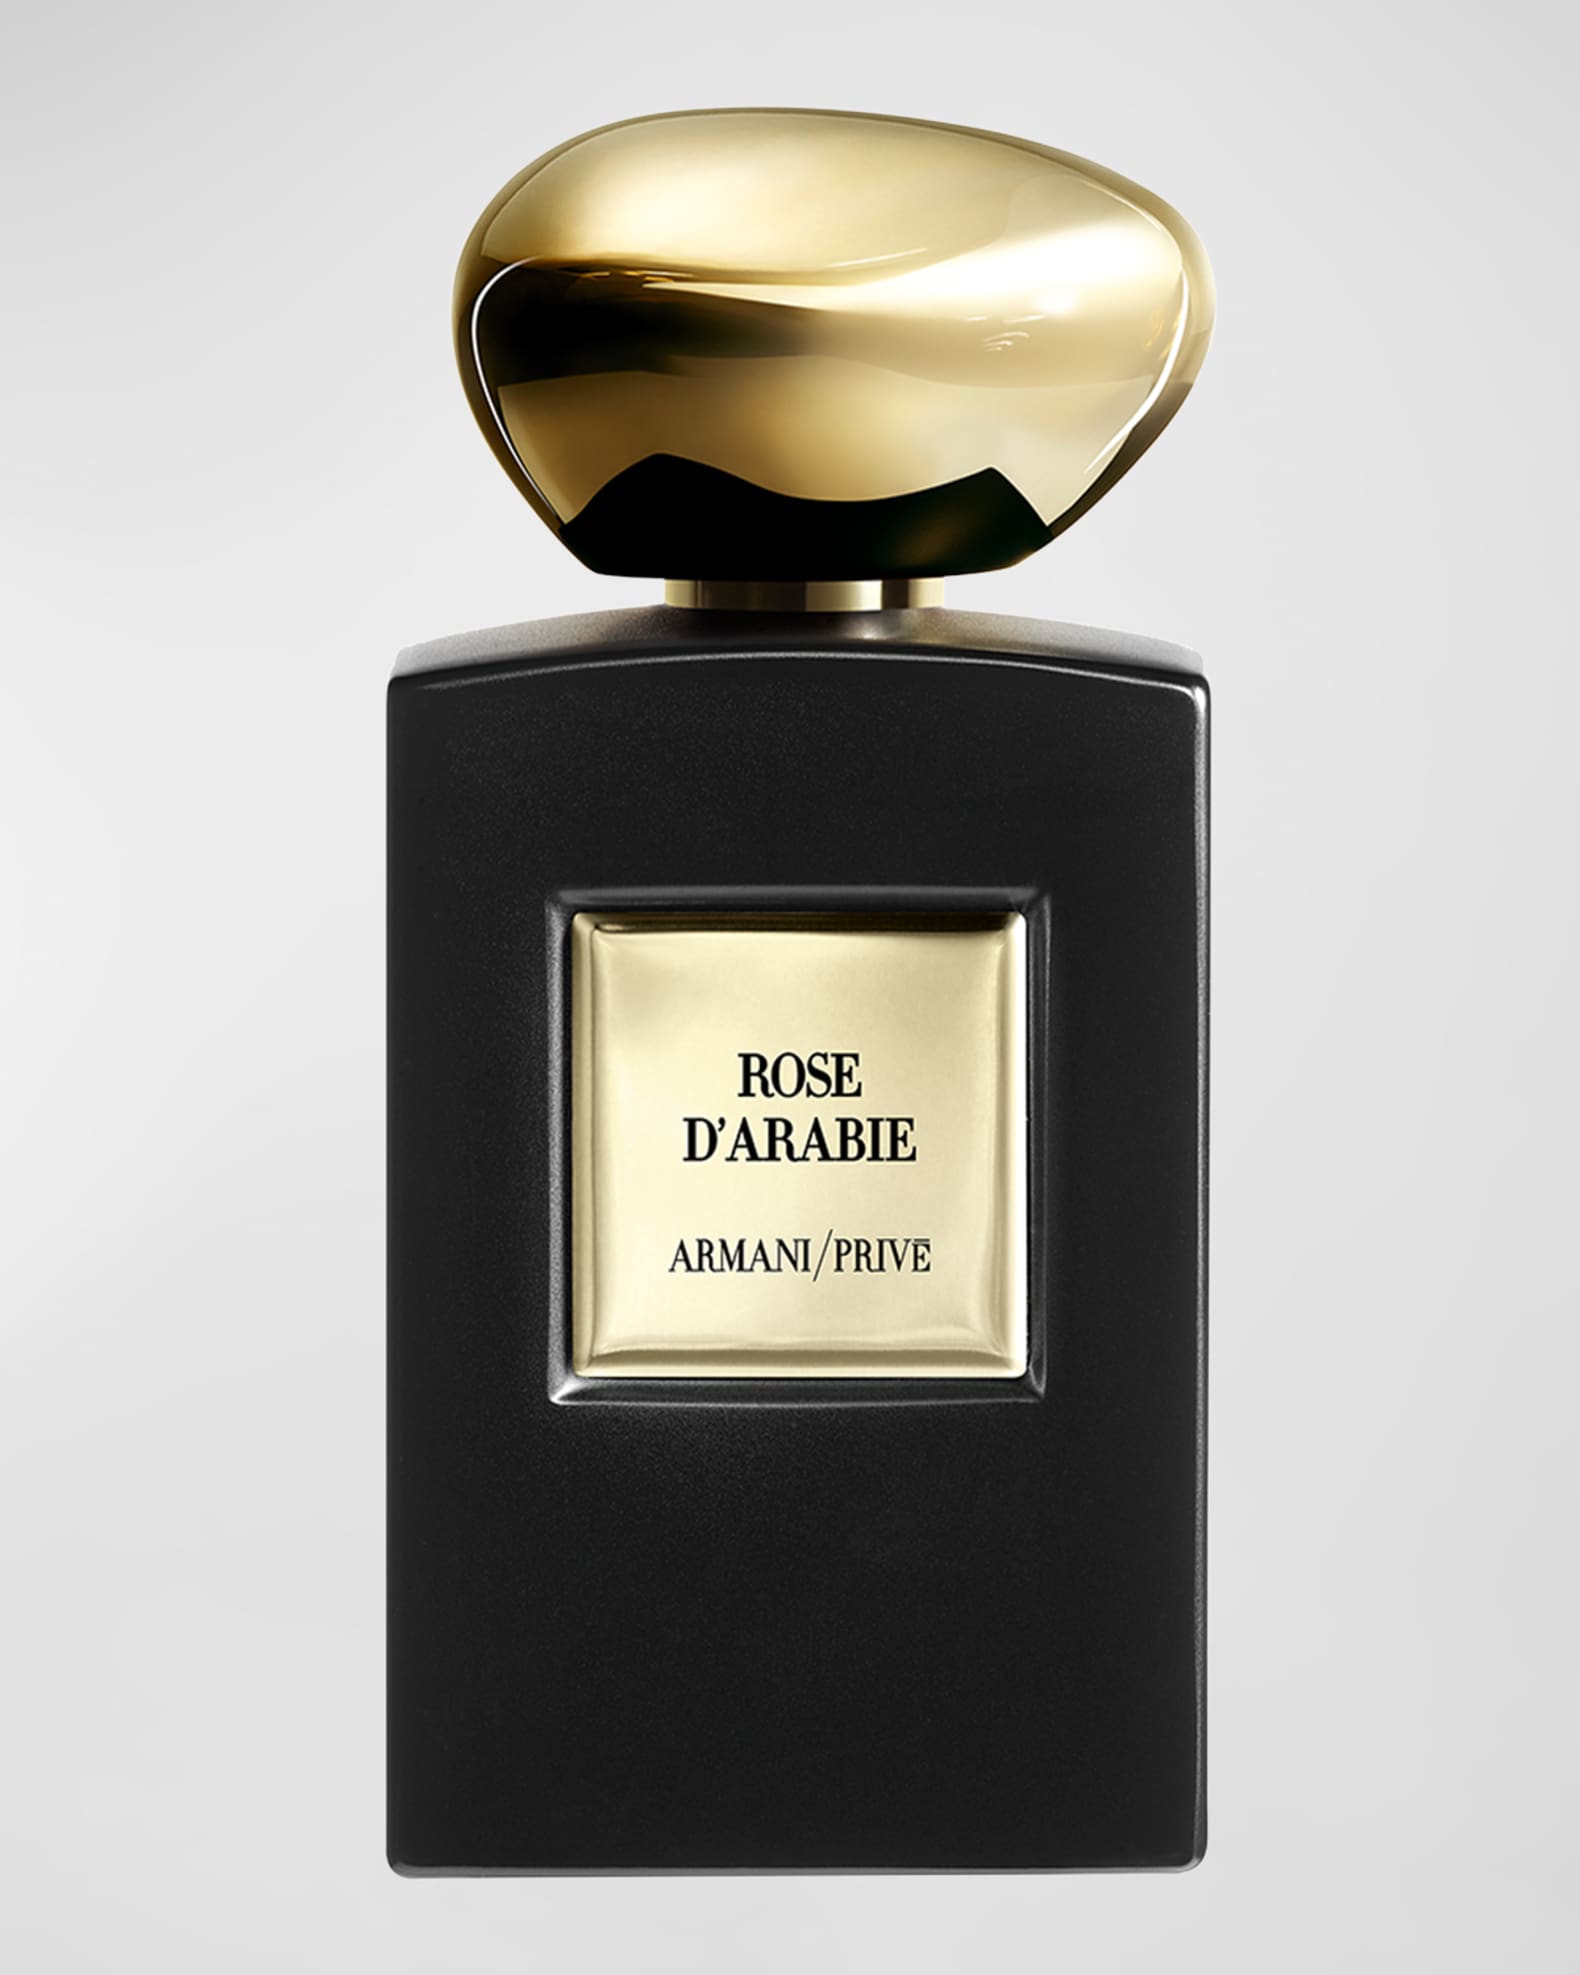 Armani Prive Rose d'Arabie perfume